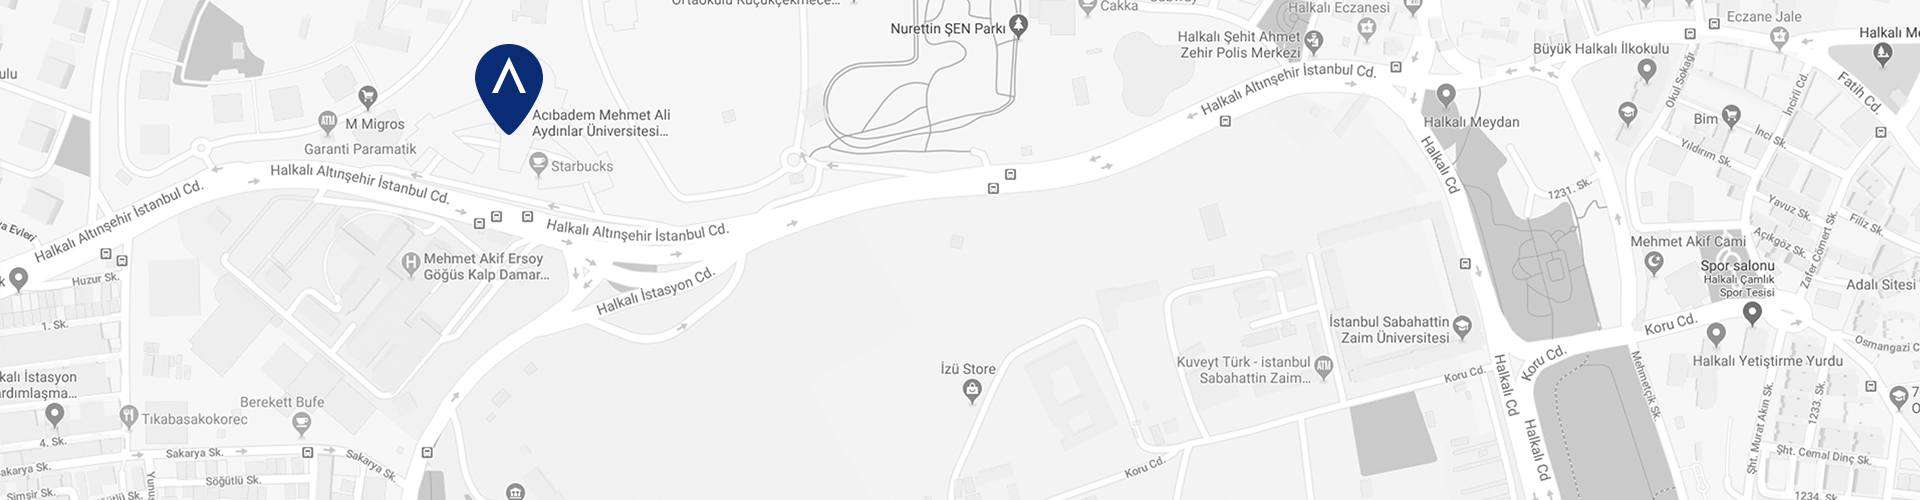 acibadem-atakent-hastanesi-google-maps-image.png